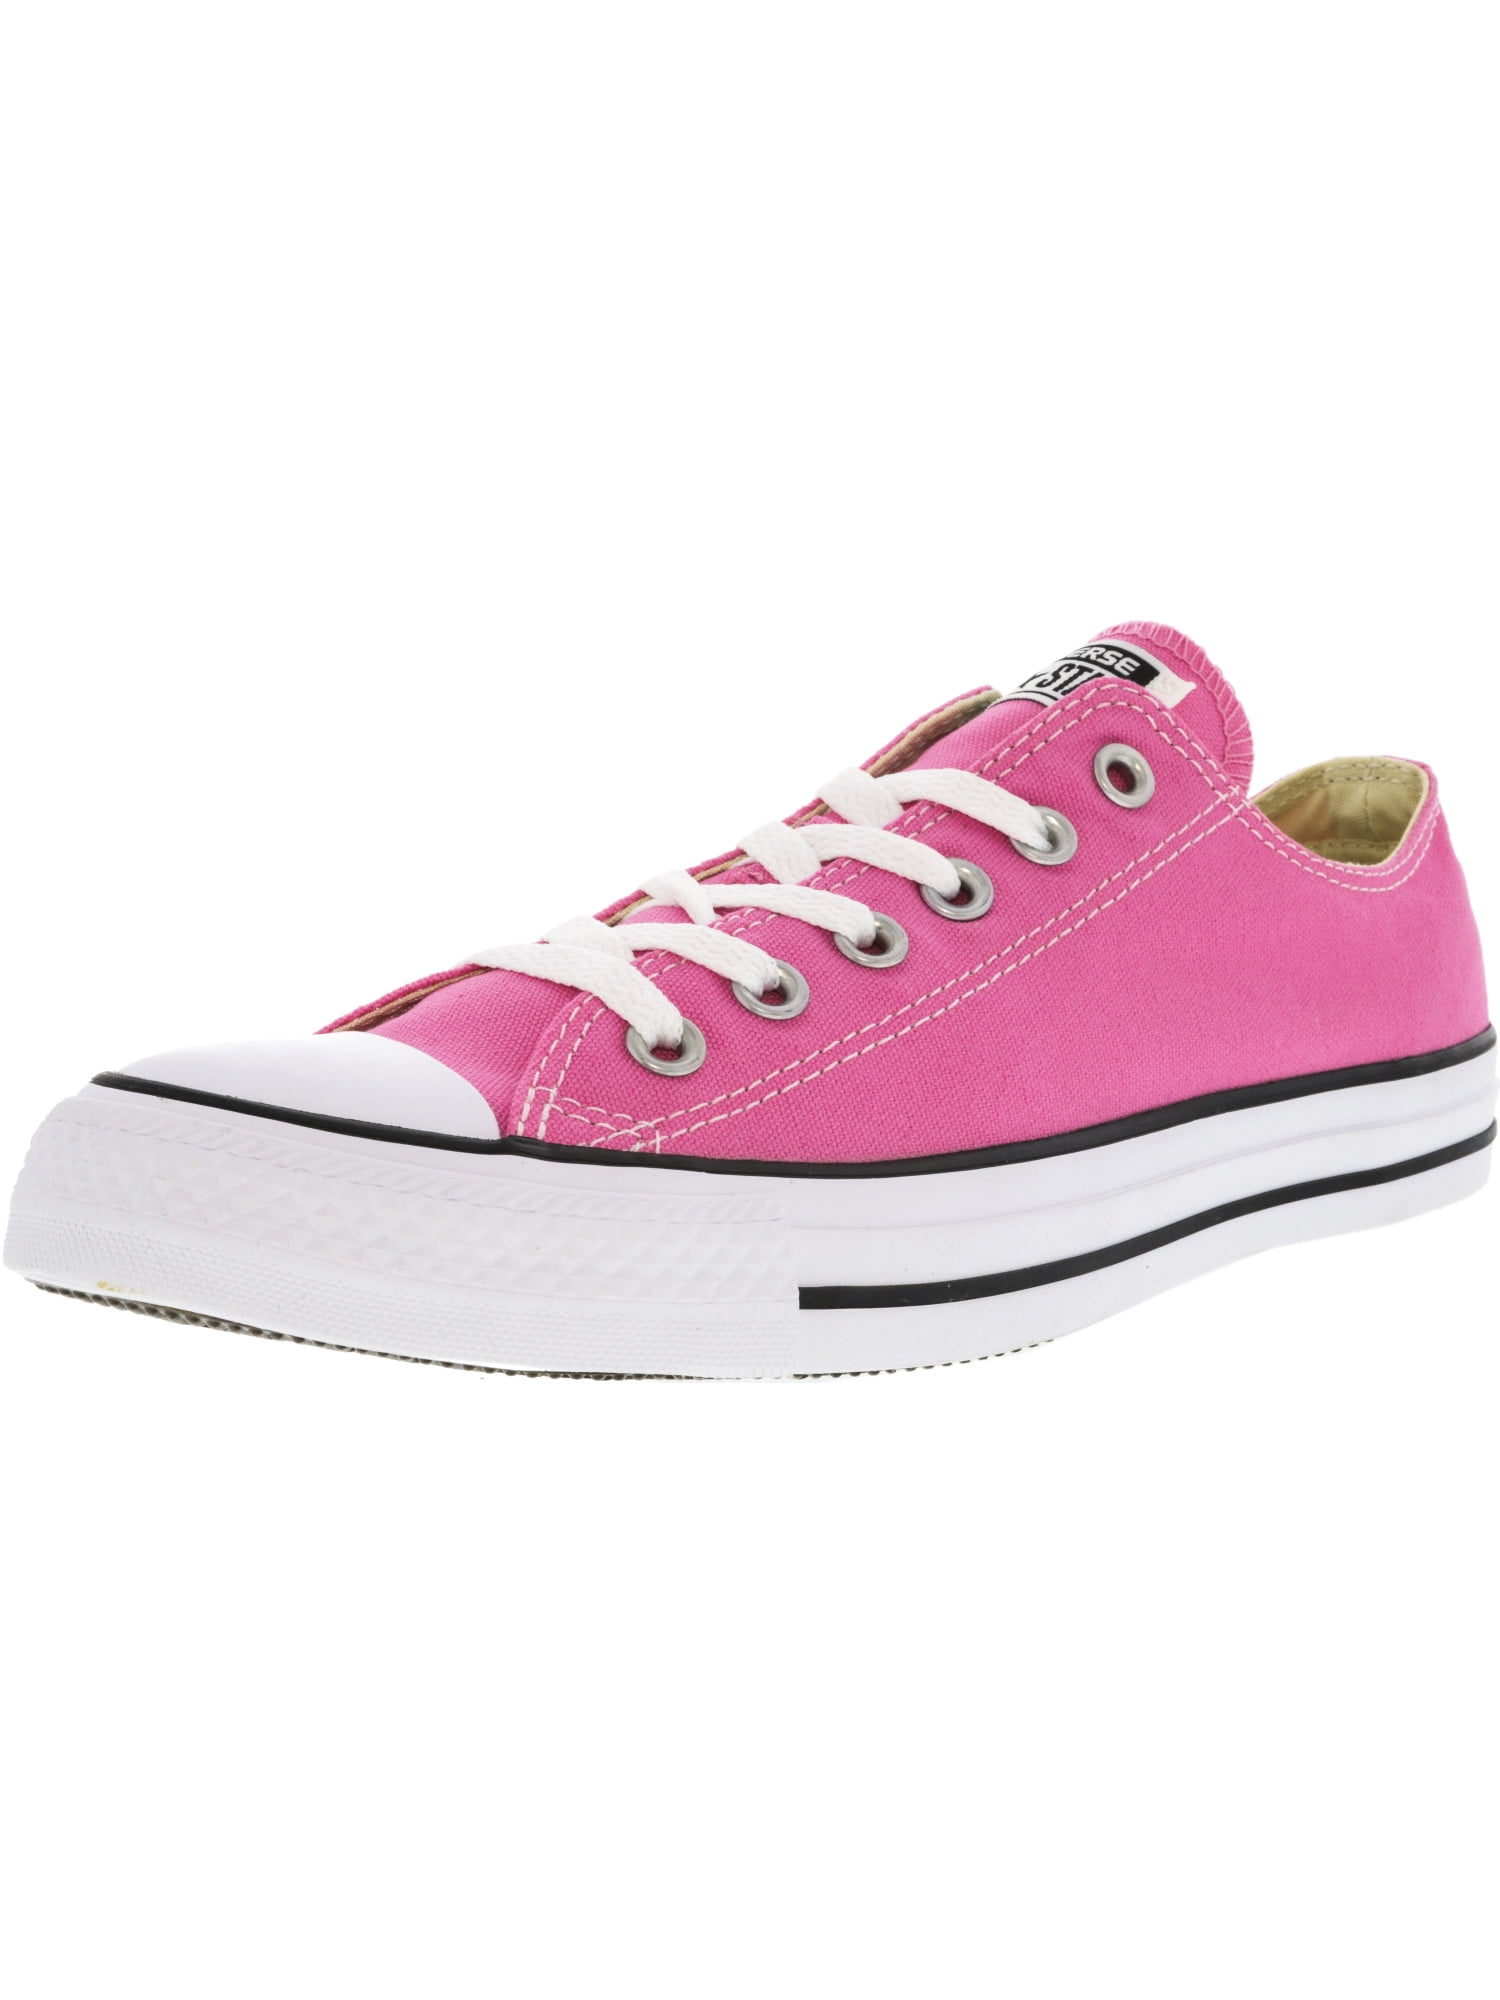 pink converse size 6